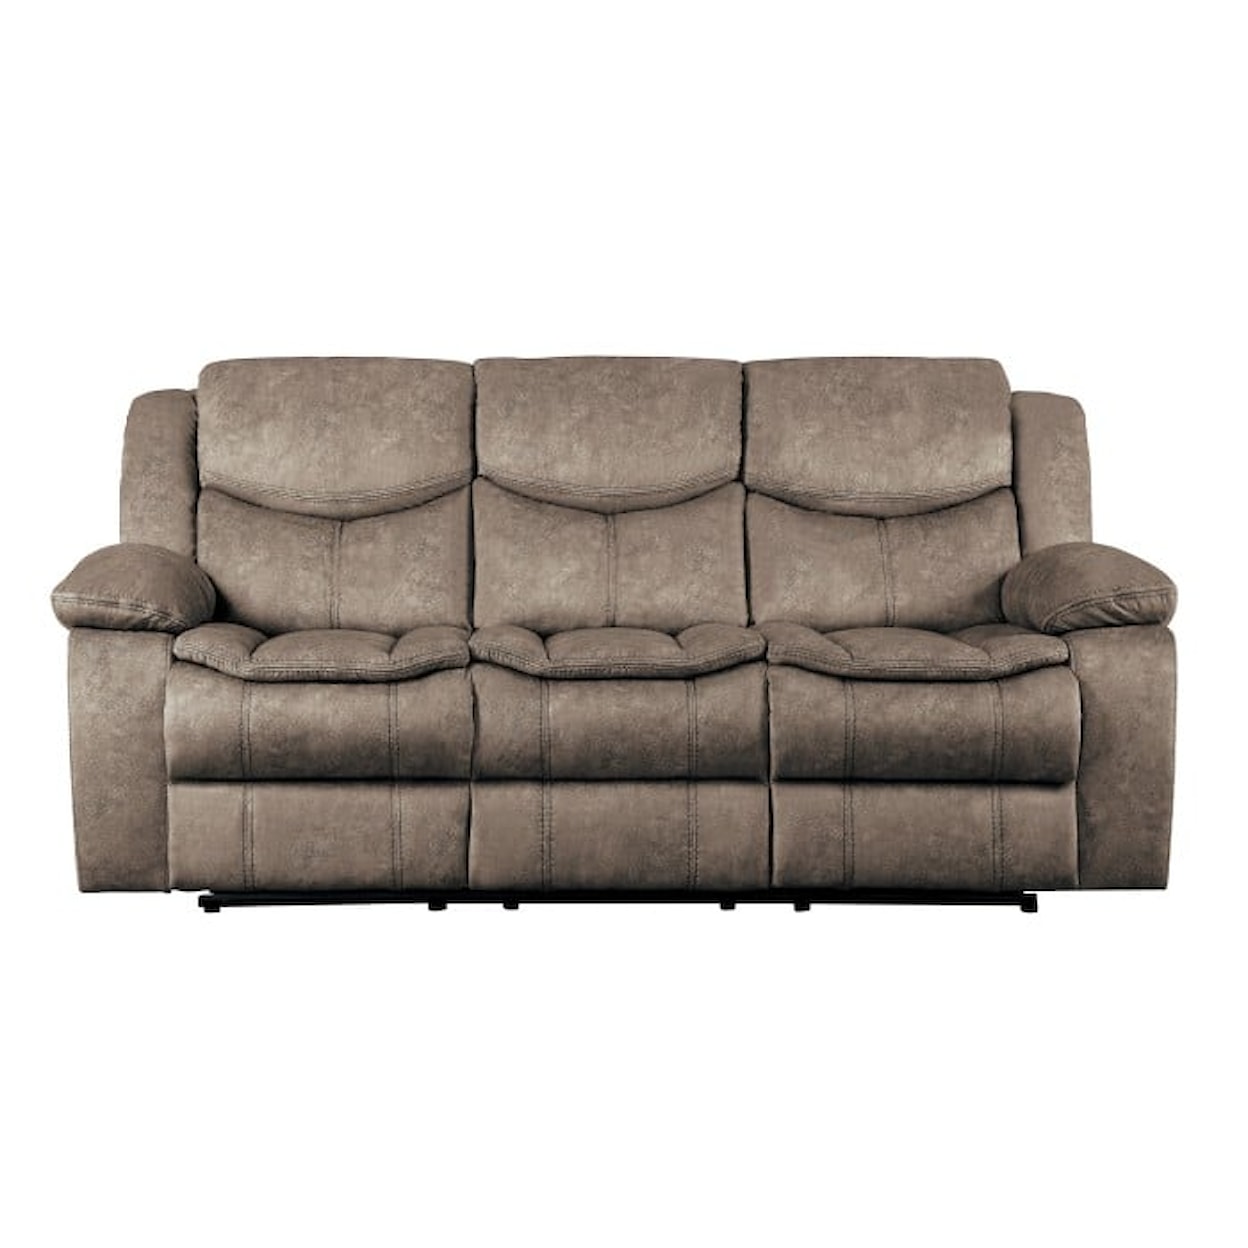 Homelegance Bastrop Double Reclining Sofa